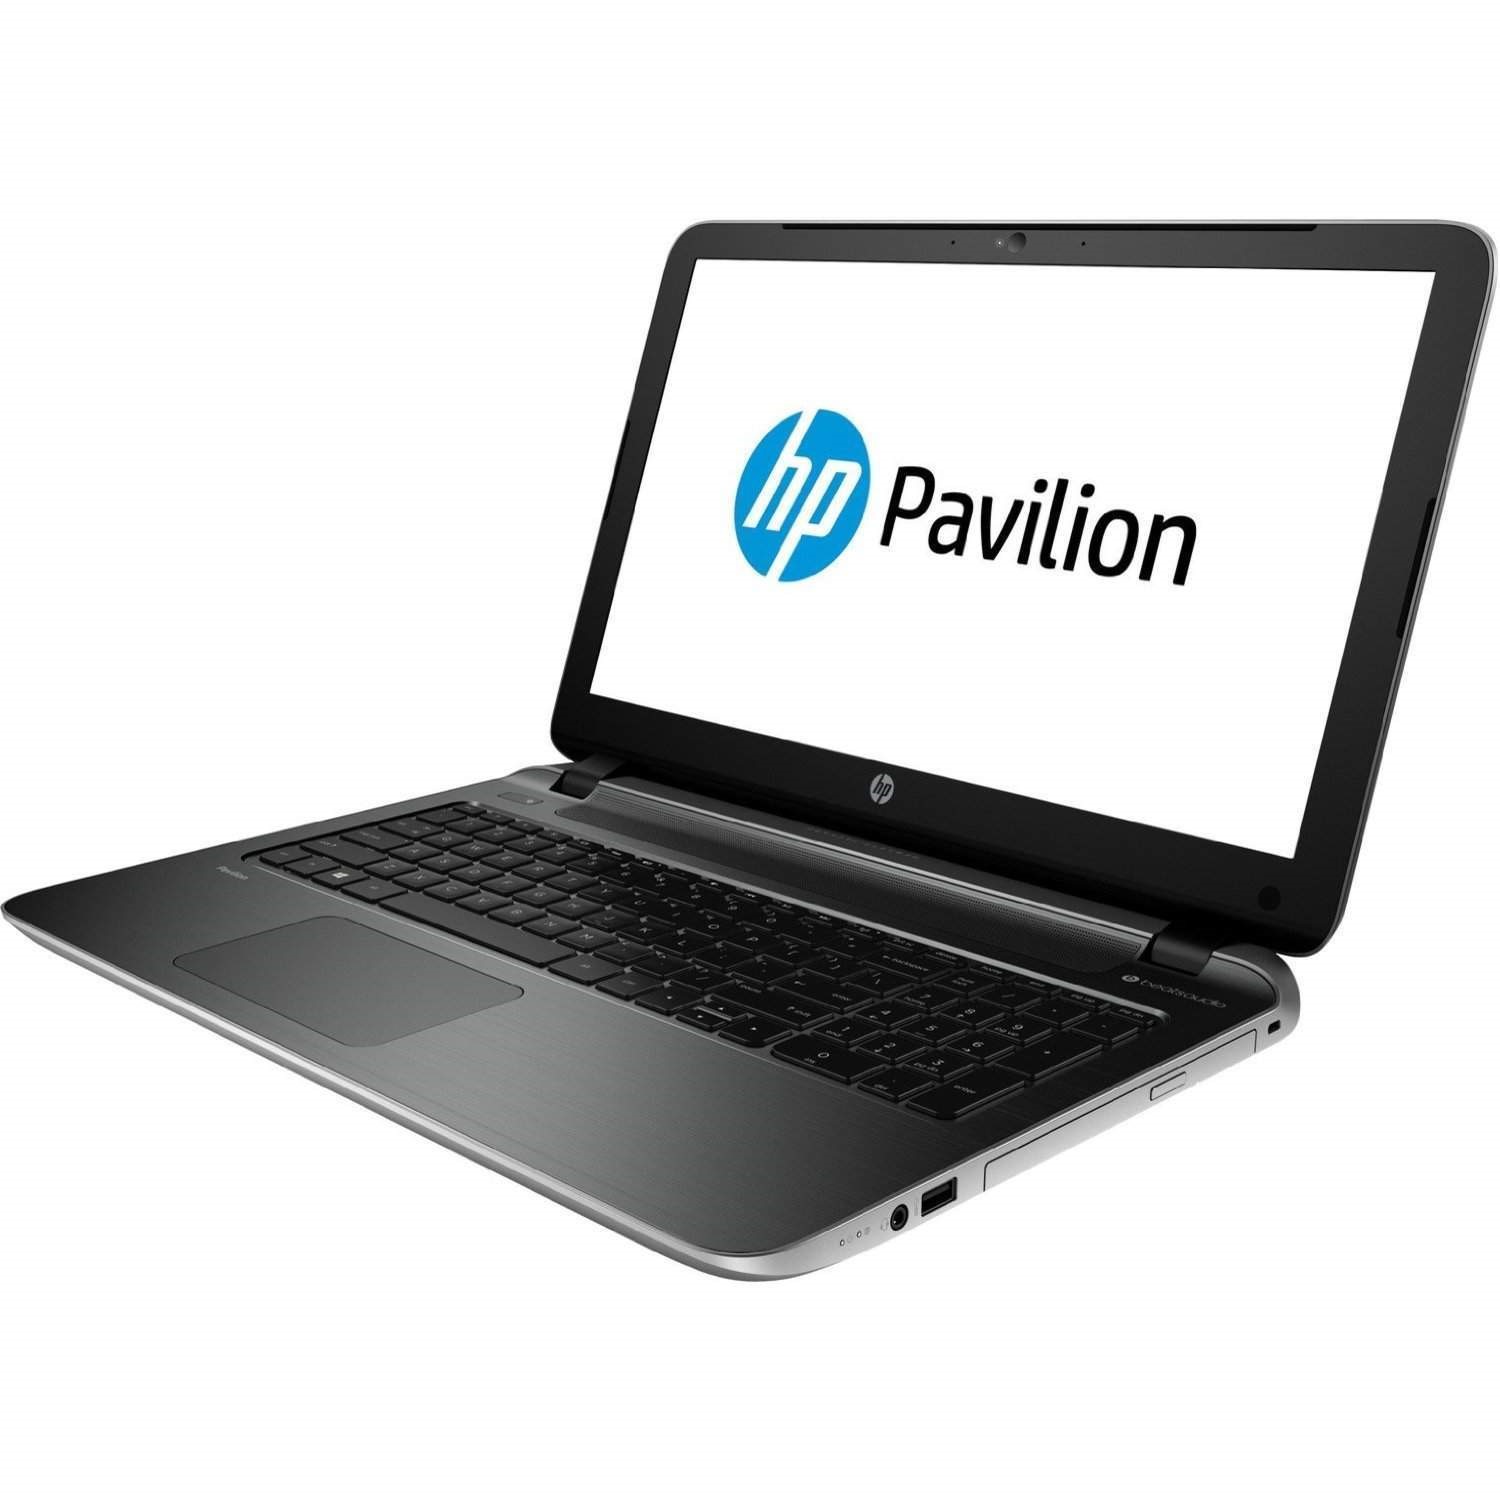 HP Pavilion 15-p209na Intel Core i3-5010U 6GB 1TB DVDSM Beats Audio Windows   Laptop - Silver / Black - Laptops Direct